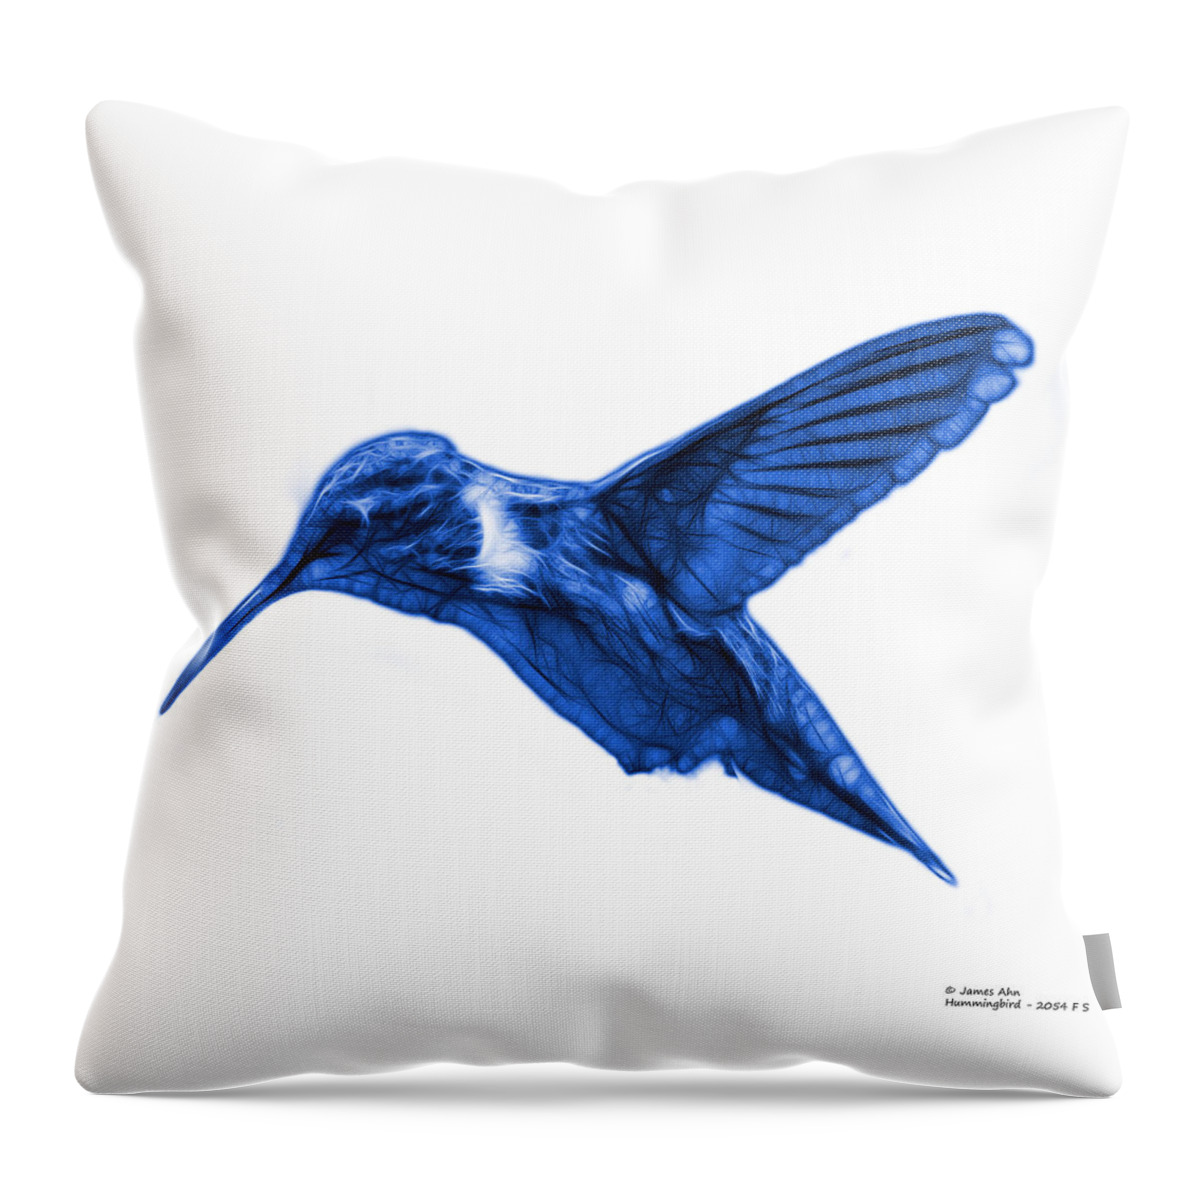 Hummingbird Throw Pillow featuring the digital art Blue Hummingbird - 2054 F S by James Ahn